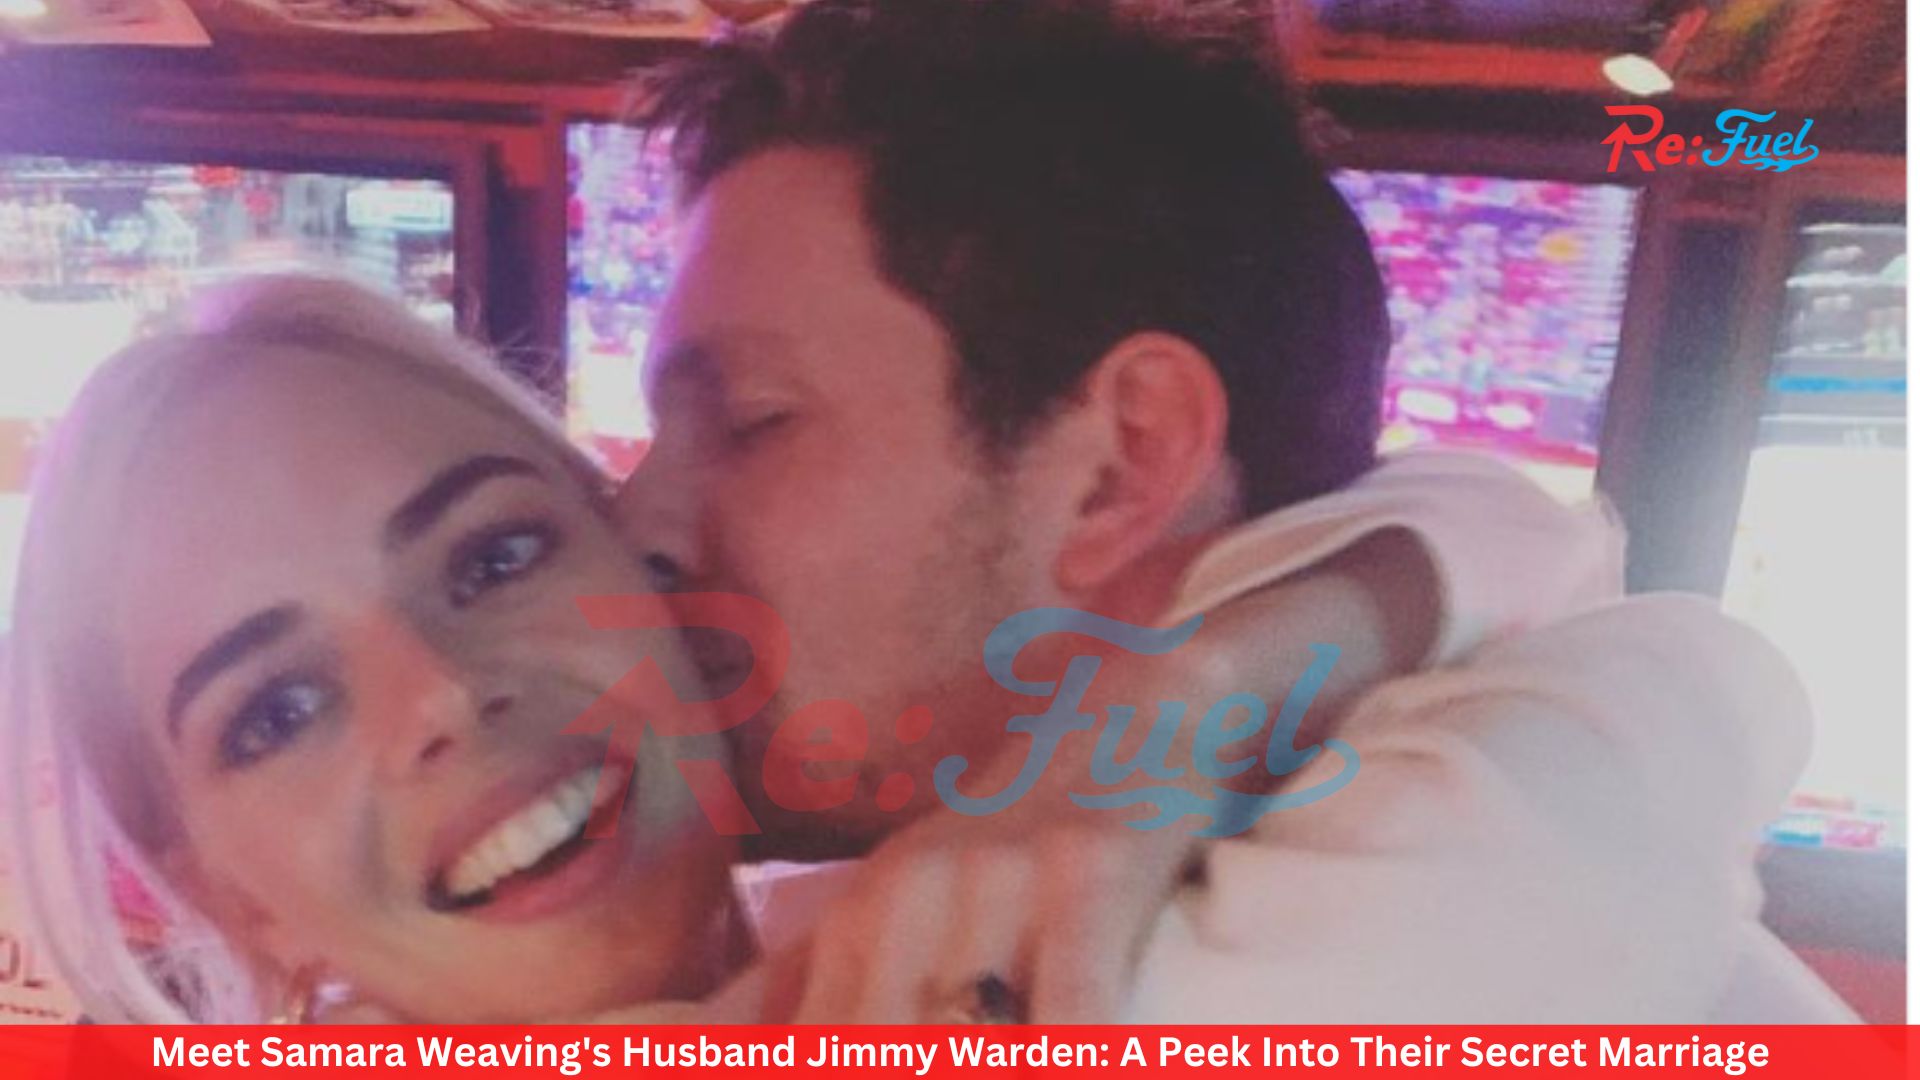 Meet Samara Weaving's Husband Jimmy Warden: A Peek Into Their Secret Marriage